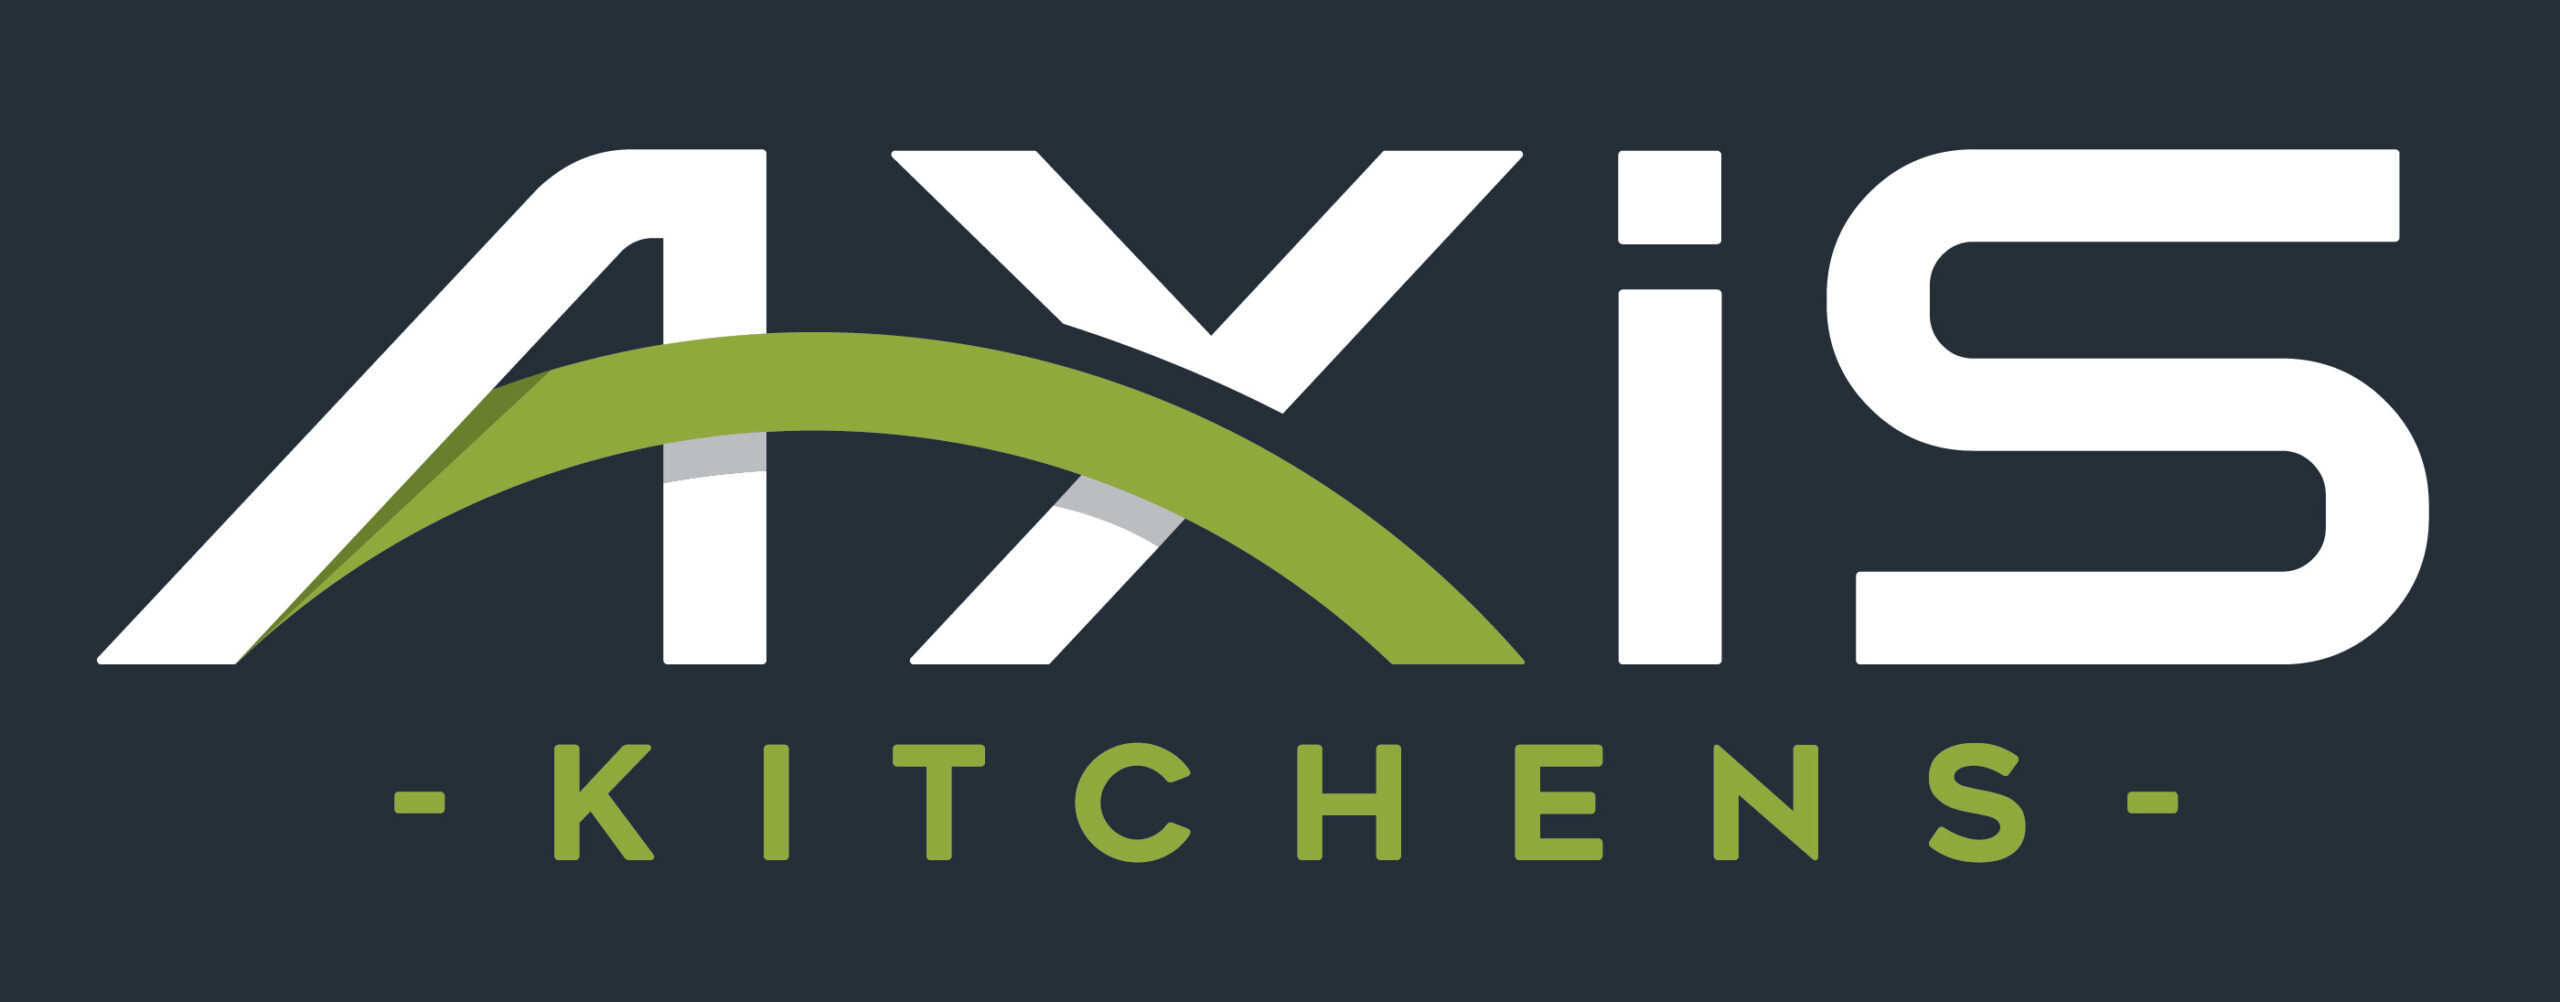 Axis Kitchens Logo - Dark Bg